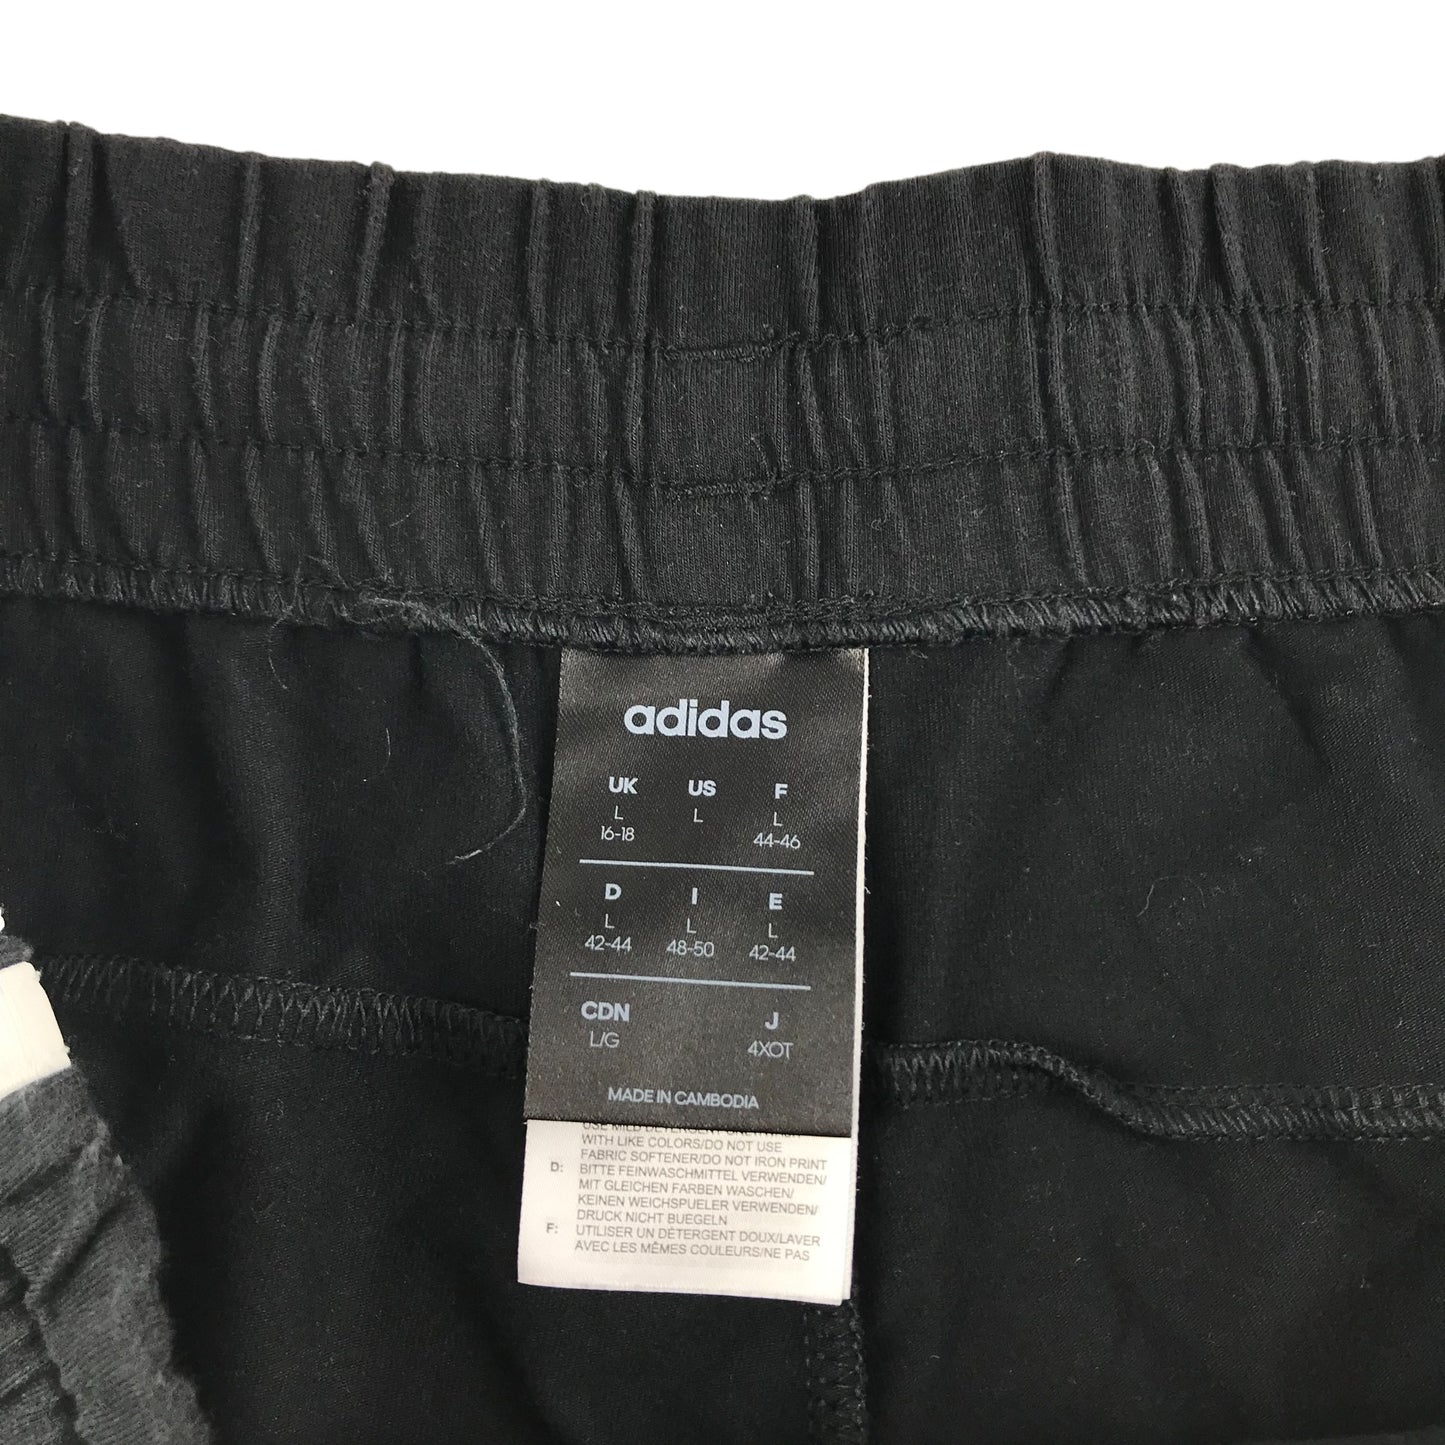 Adidas Shorts Size Women's L Black Light Cotton Blend Jersey Style